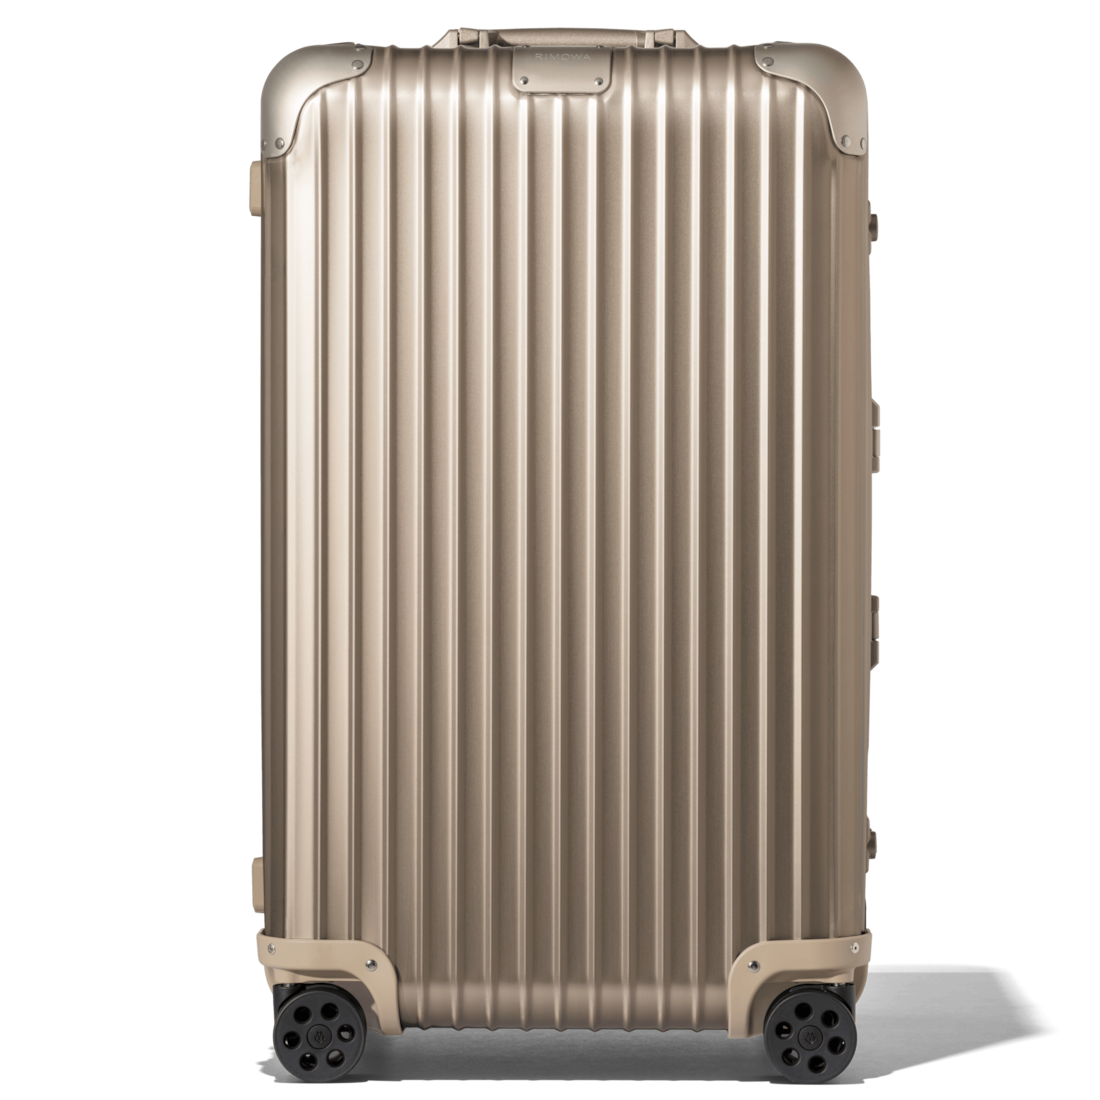 rimowa large luggage